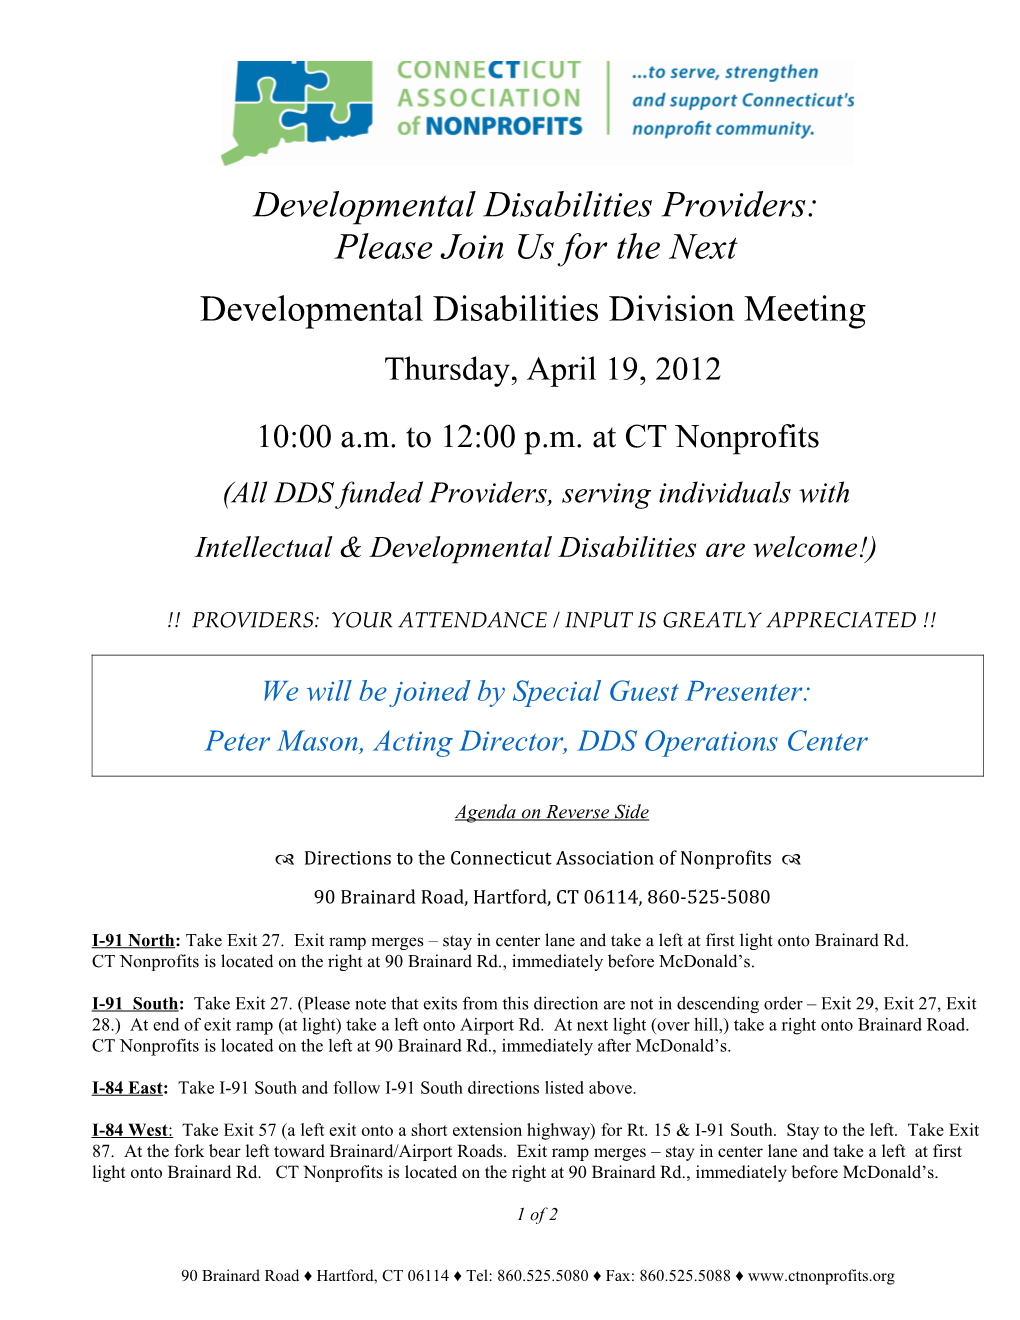 Developmental Disabilities Division Meeting